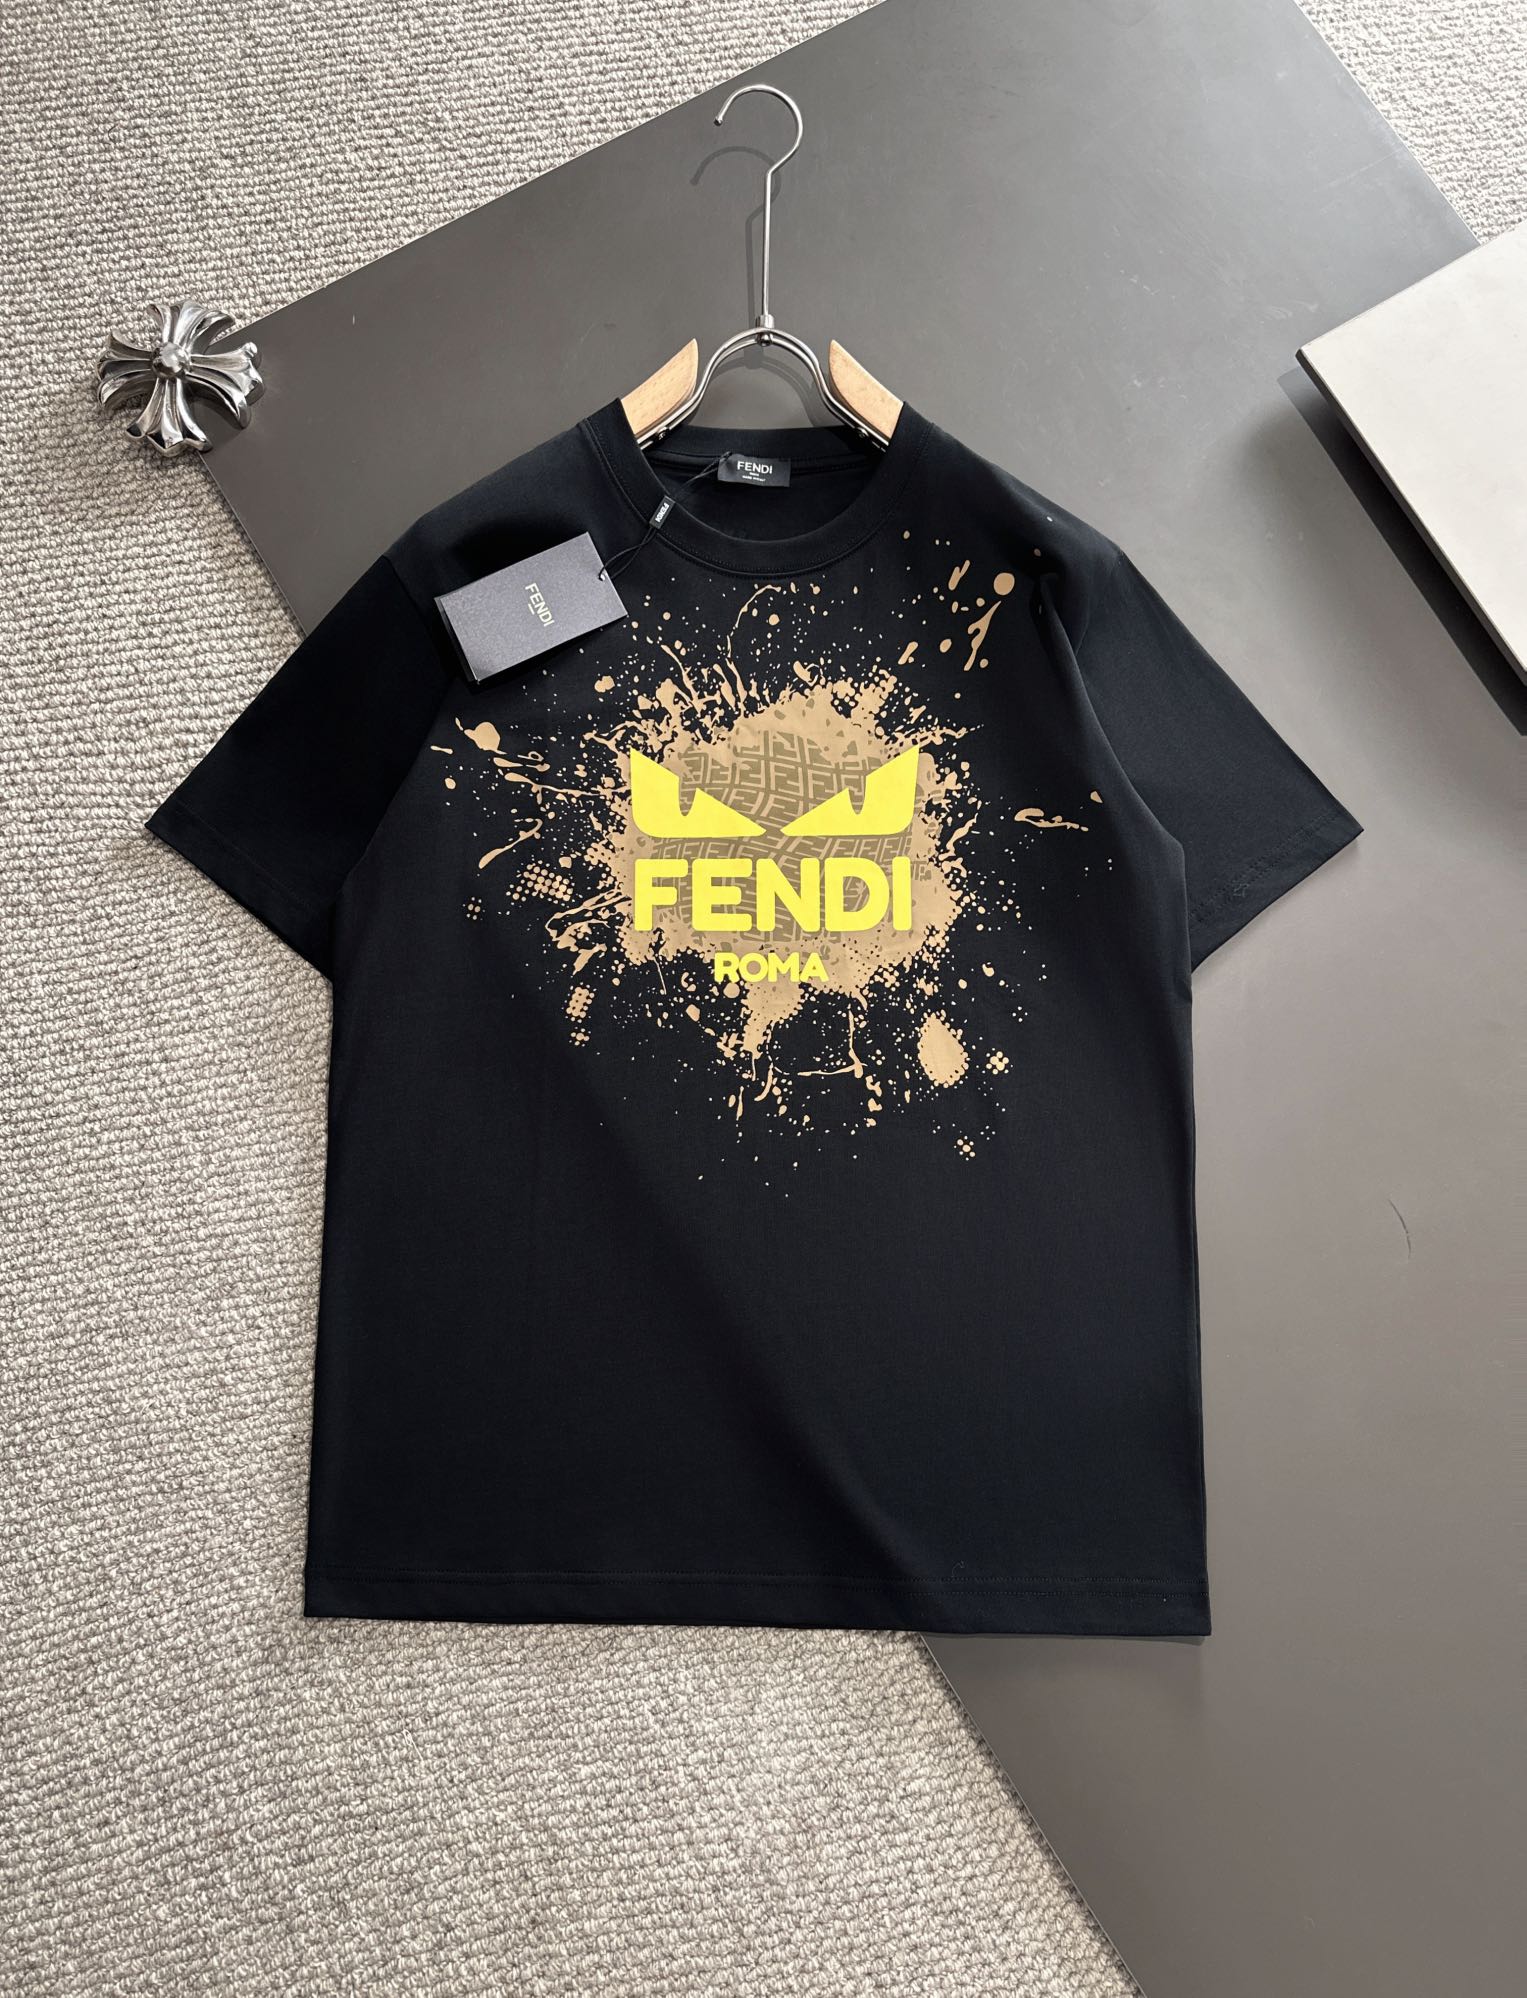 Fendi Clothing T-Shirt Black White Printing Unisex Spring Collection Short Sleeve